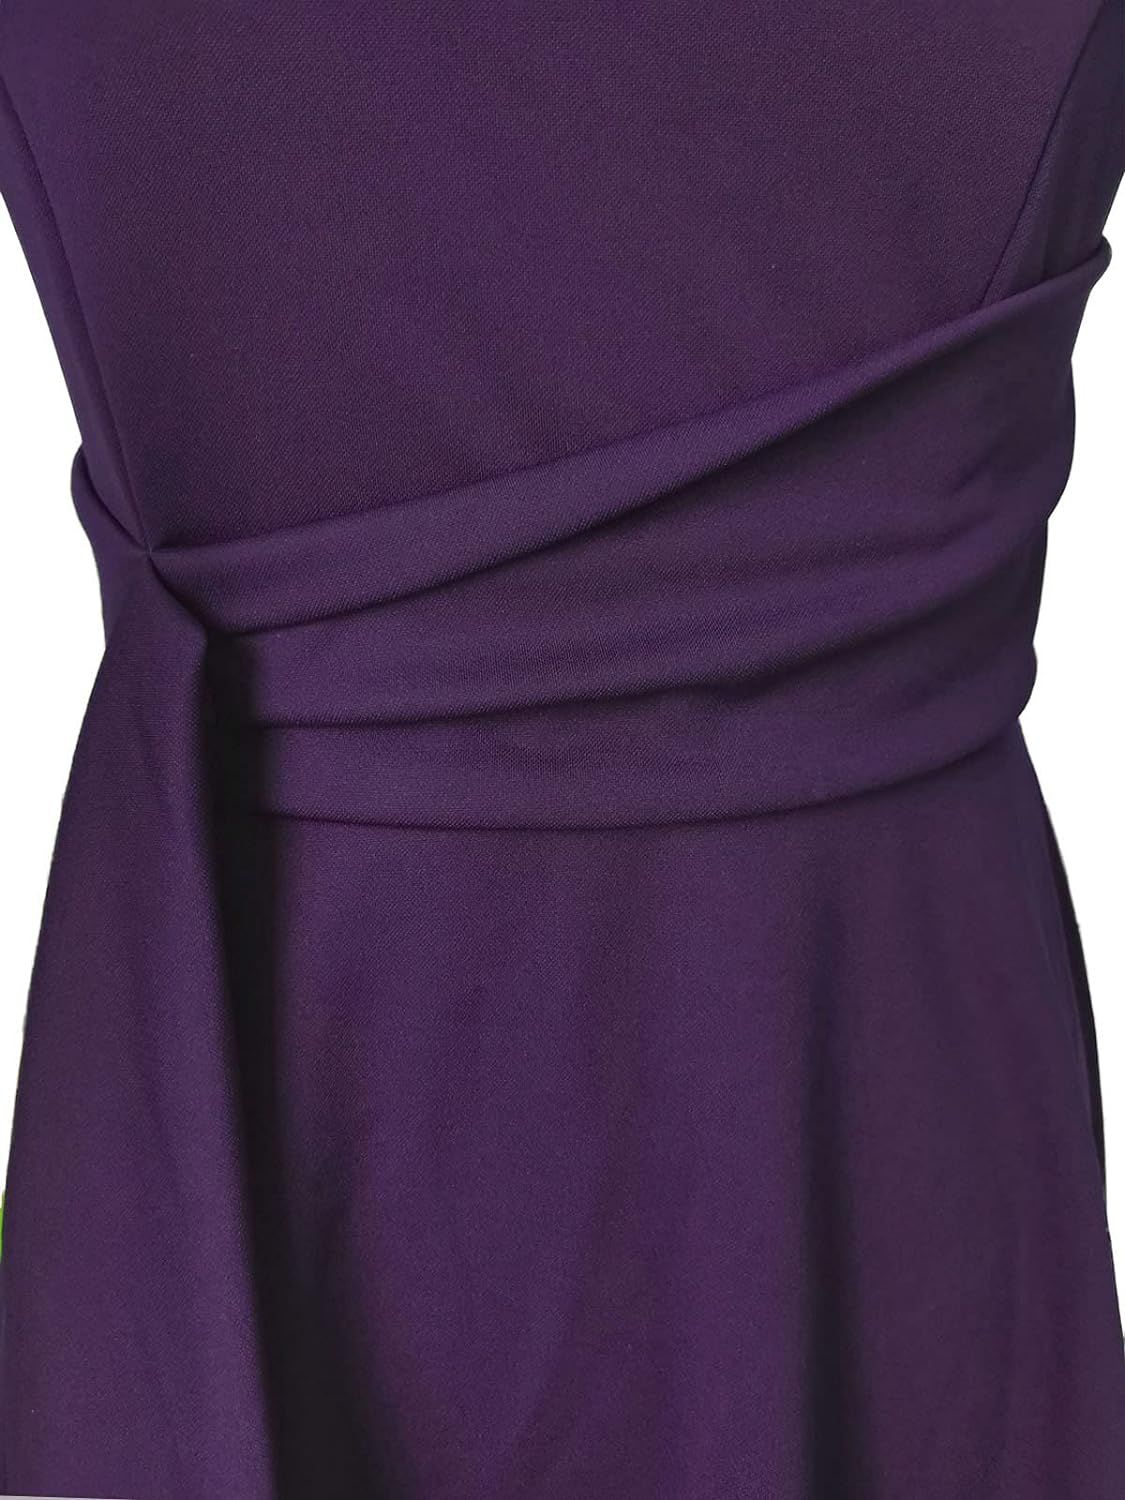 FENJAR Womens Elegance Audrey Hepburn Style Ruched 3/4 Sleeve Midi A-line Dress | Amazon (US)